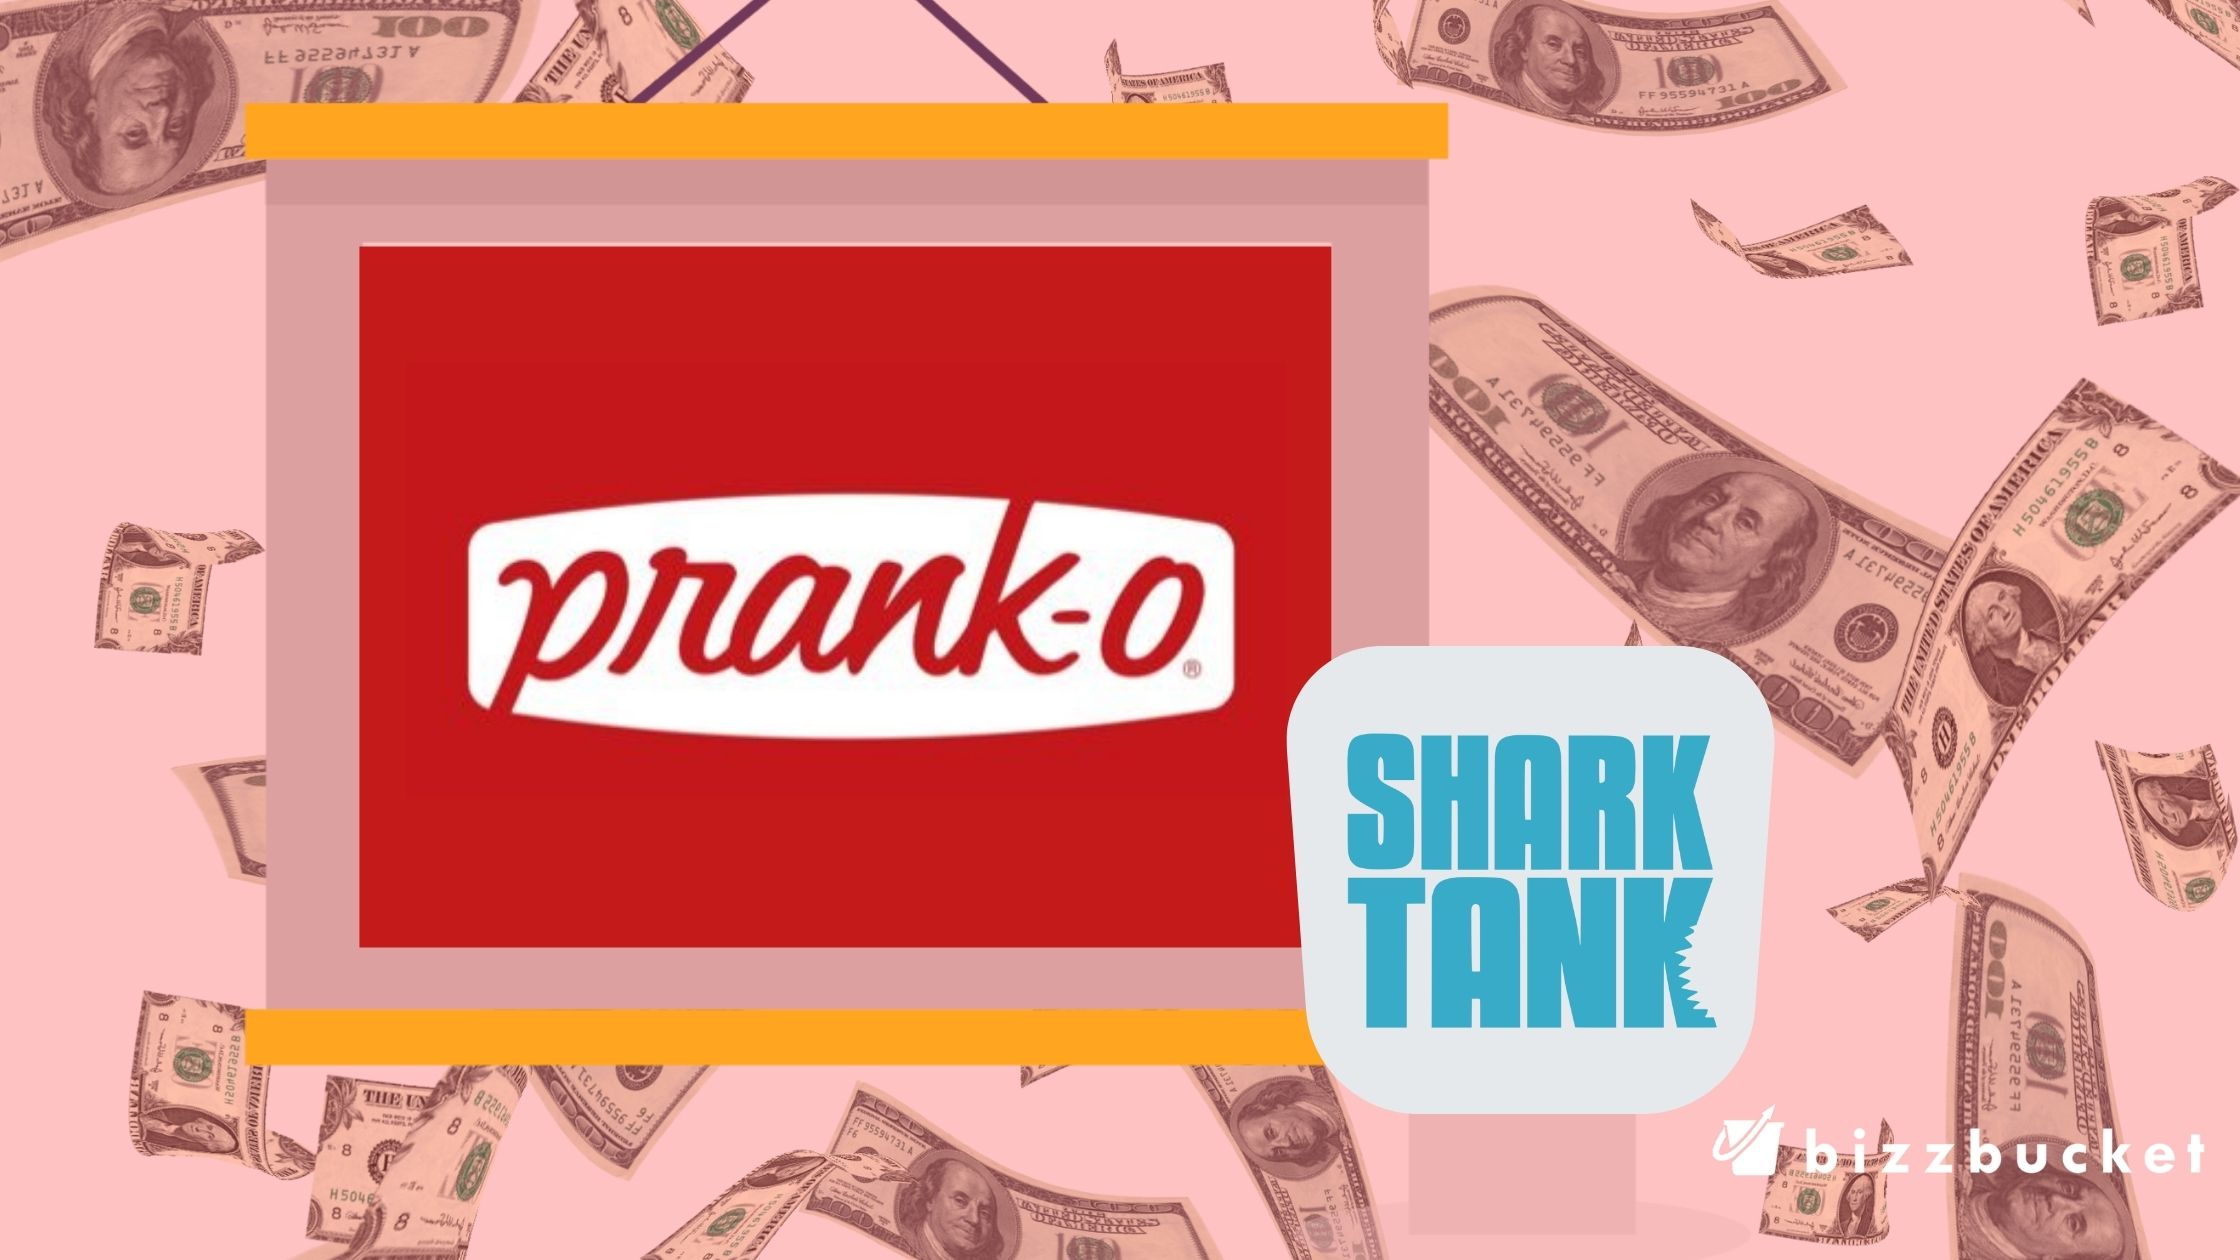 Prank-O shark tank update